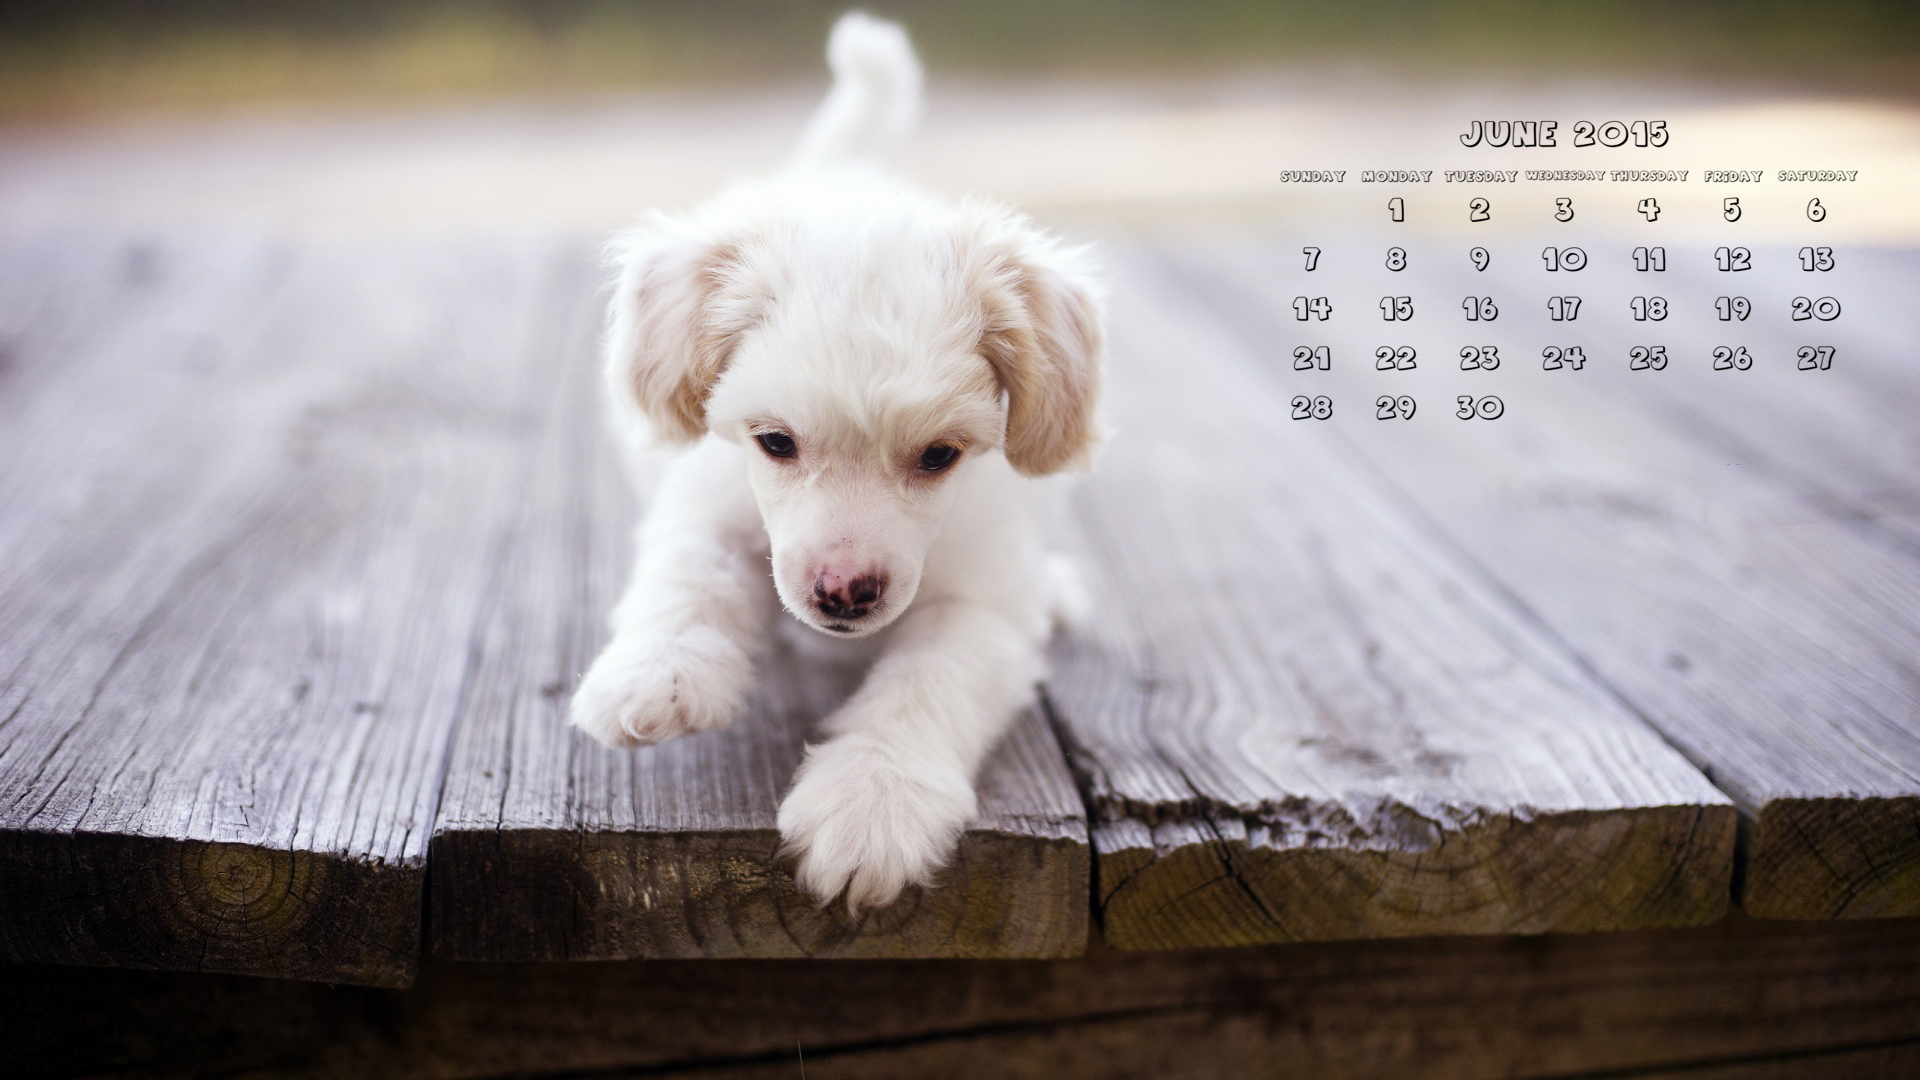 cute-dog-june-2015-wallpaper-1920x1080.jpg